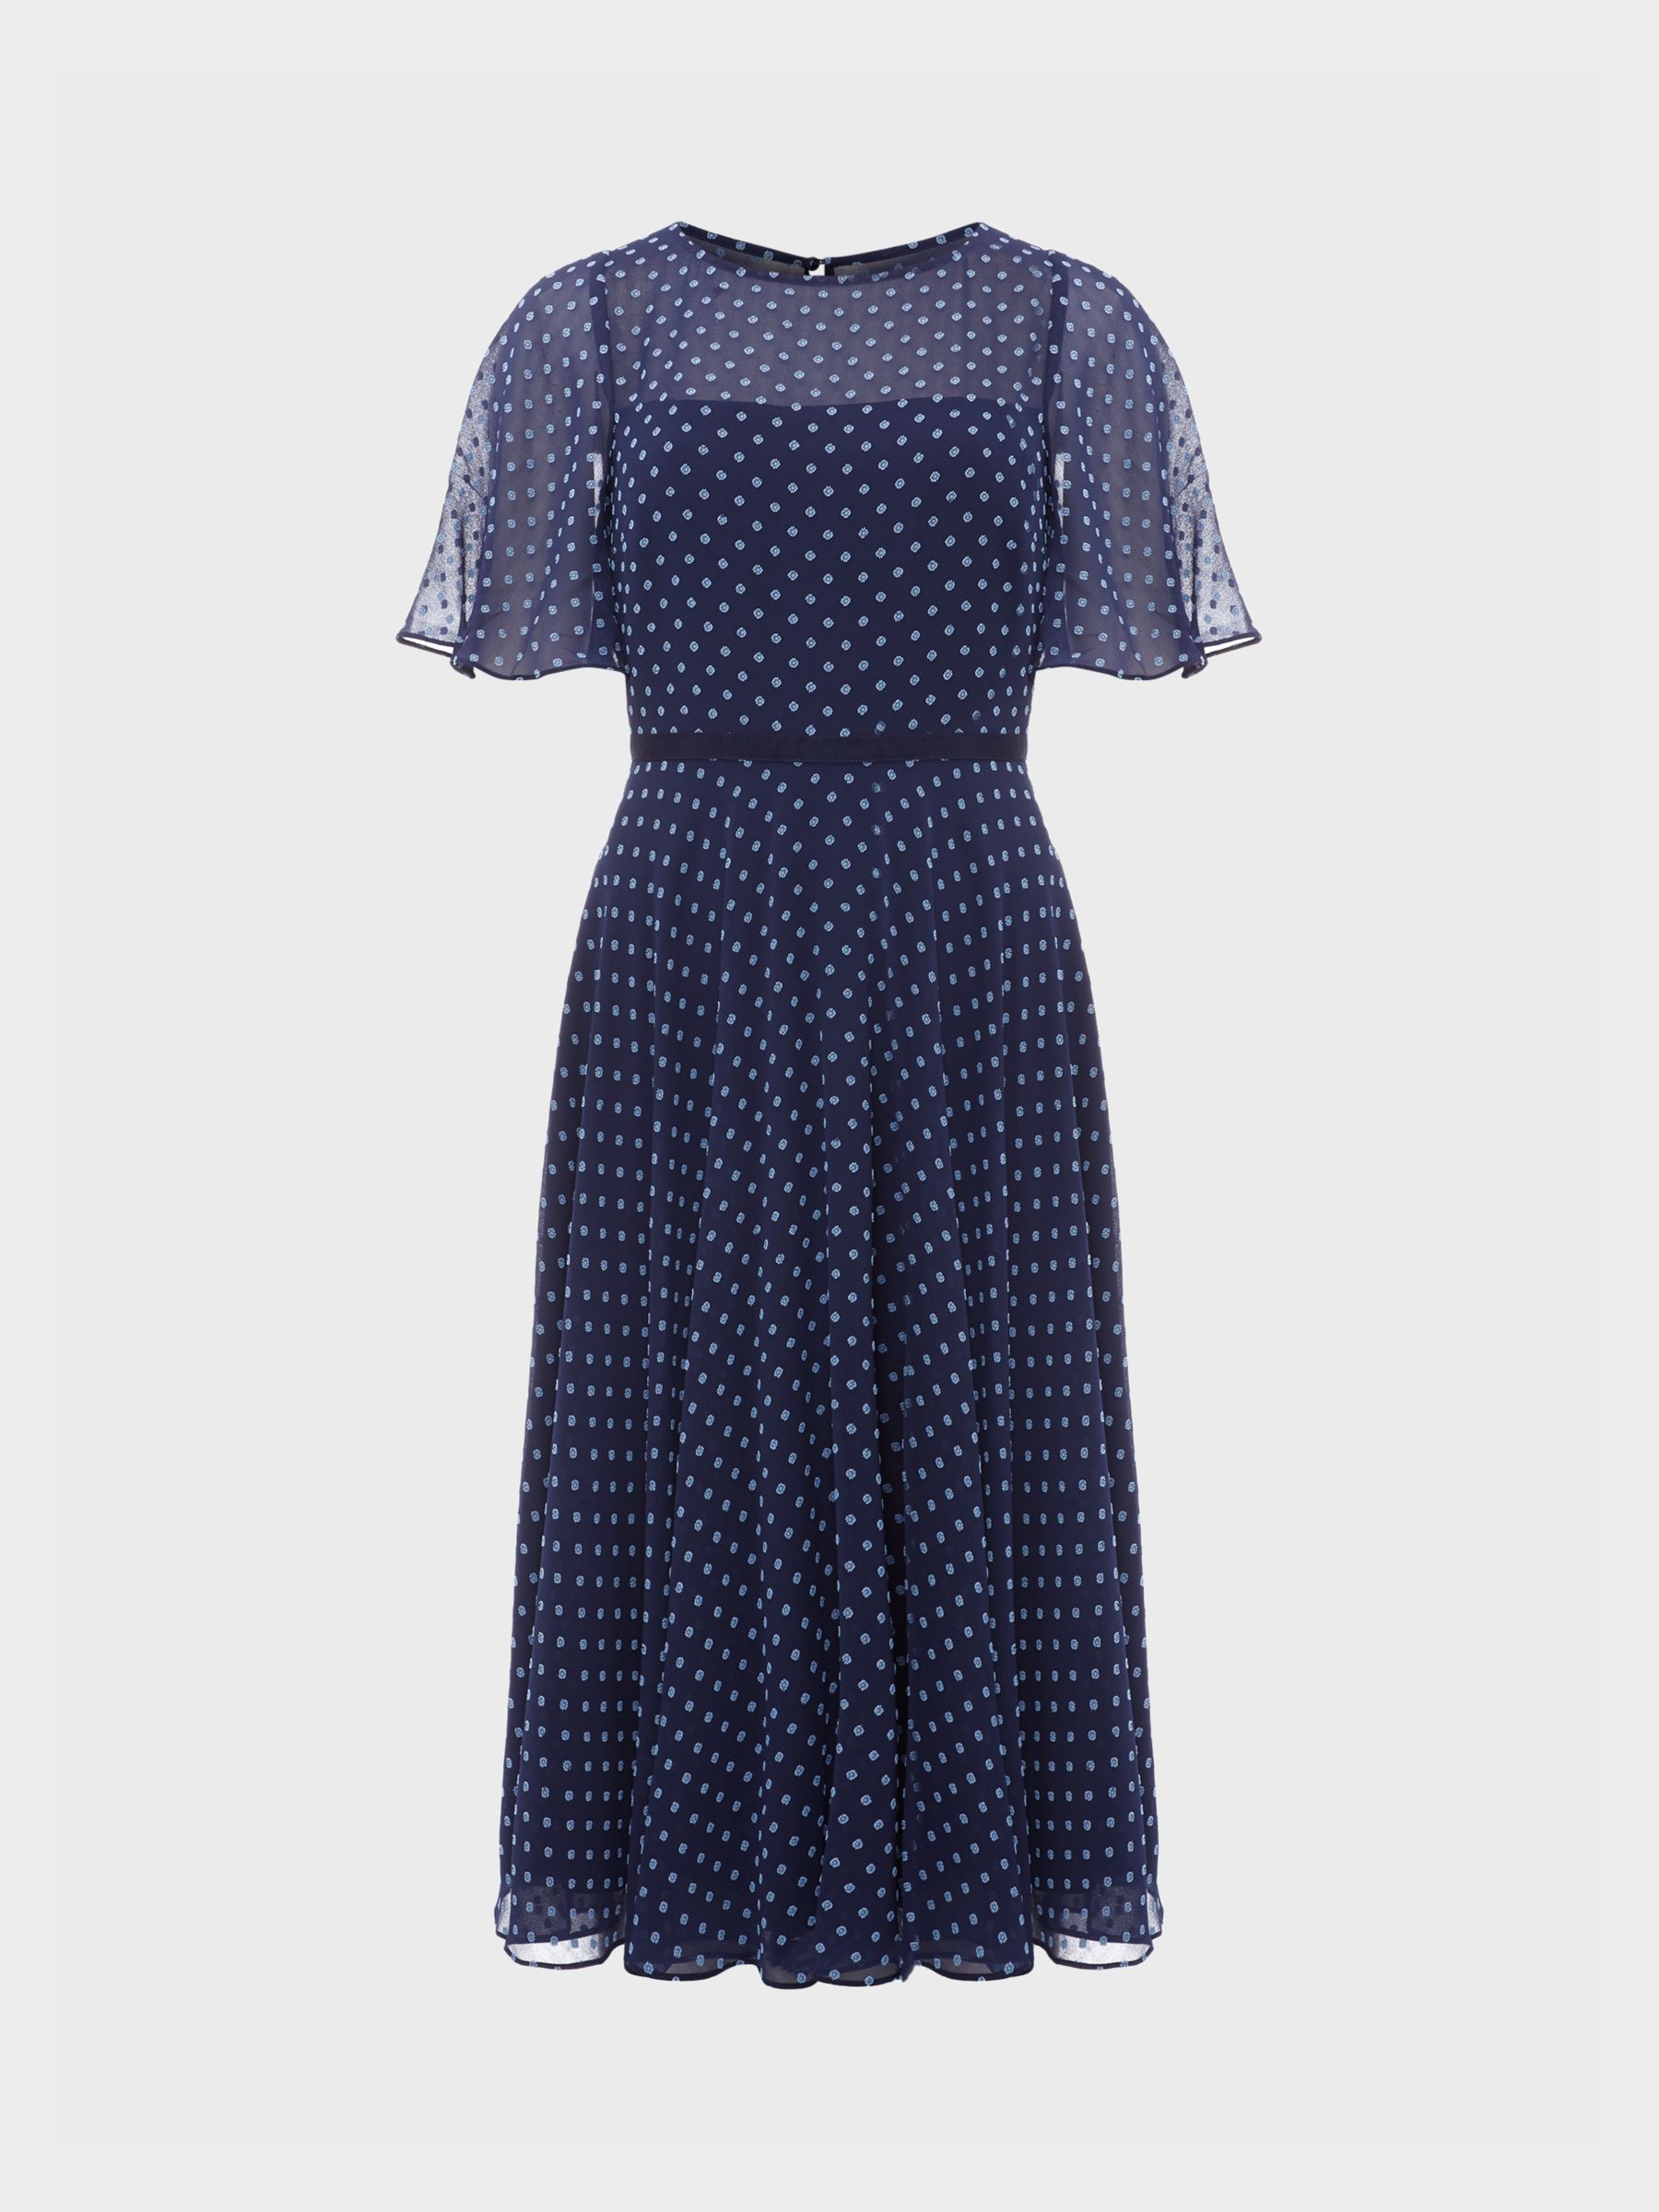 Hobbs Eleanor Spot Print Dress, Midnight Blue at John Lewis & Partners